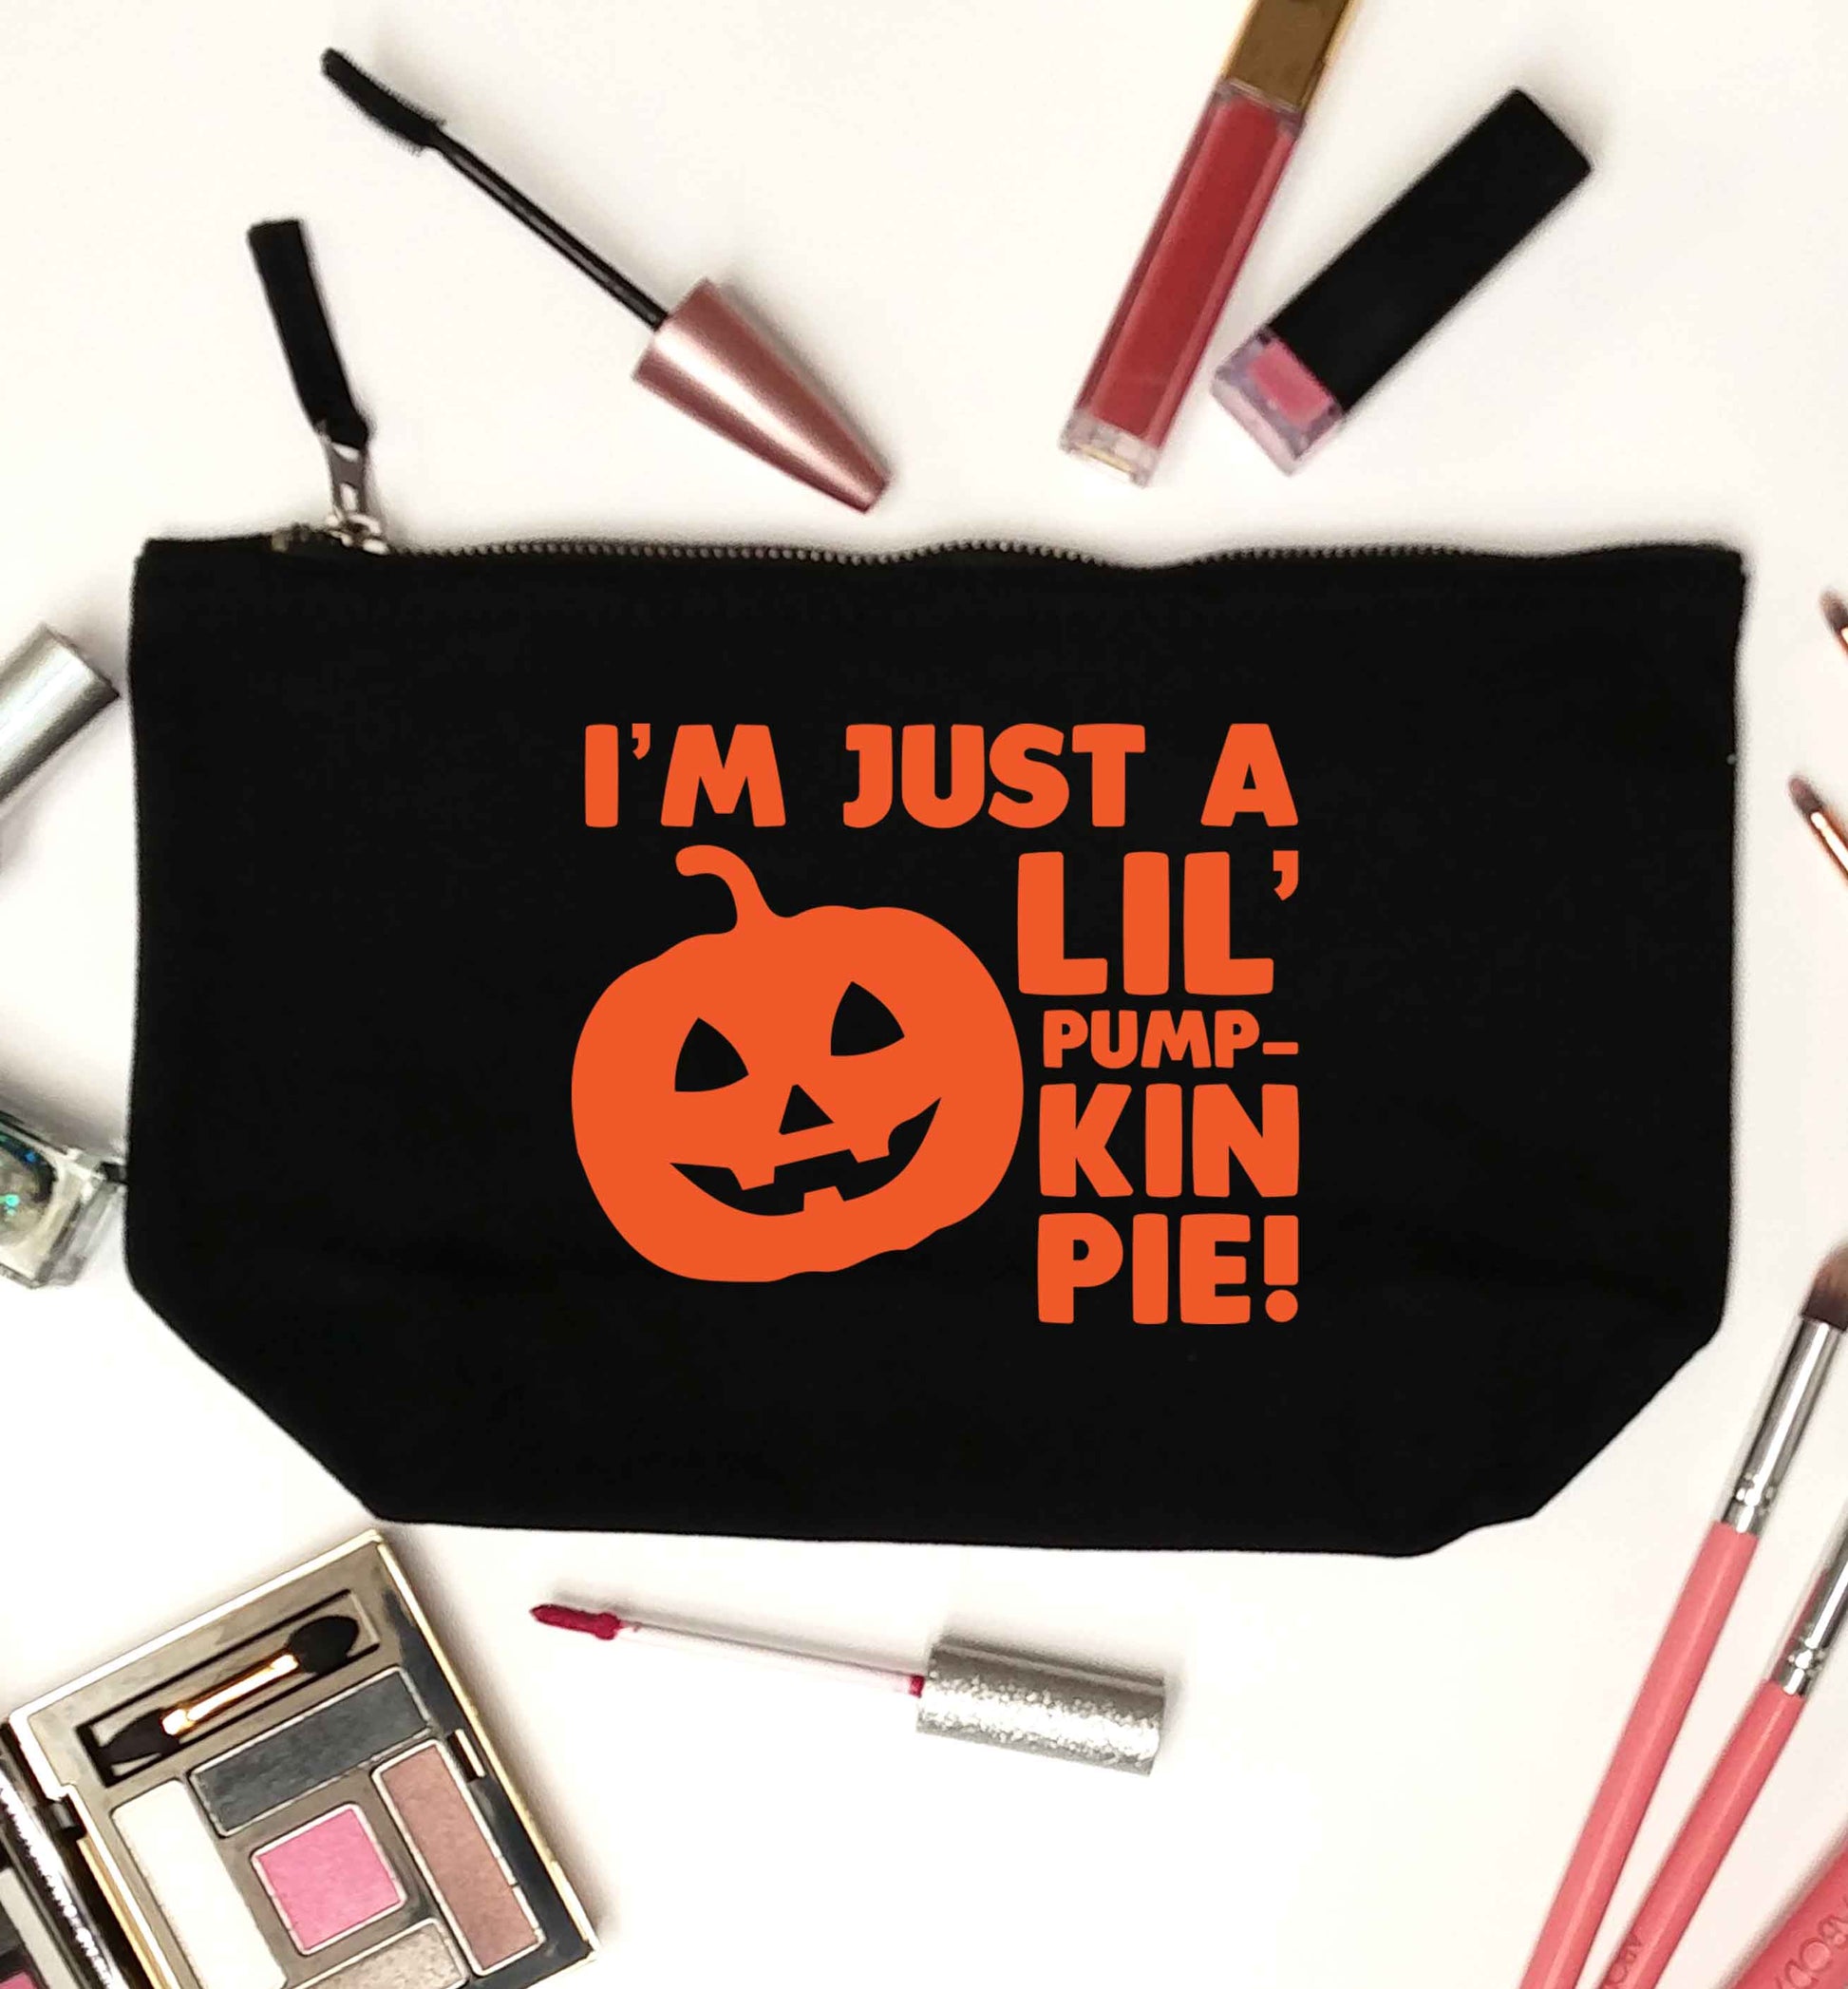 I'm just a lil' pumpkin pie black makeup bag